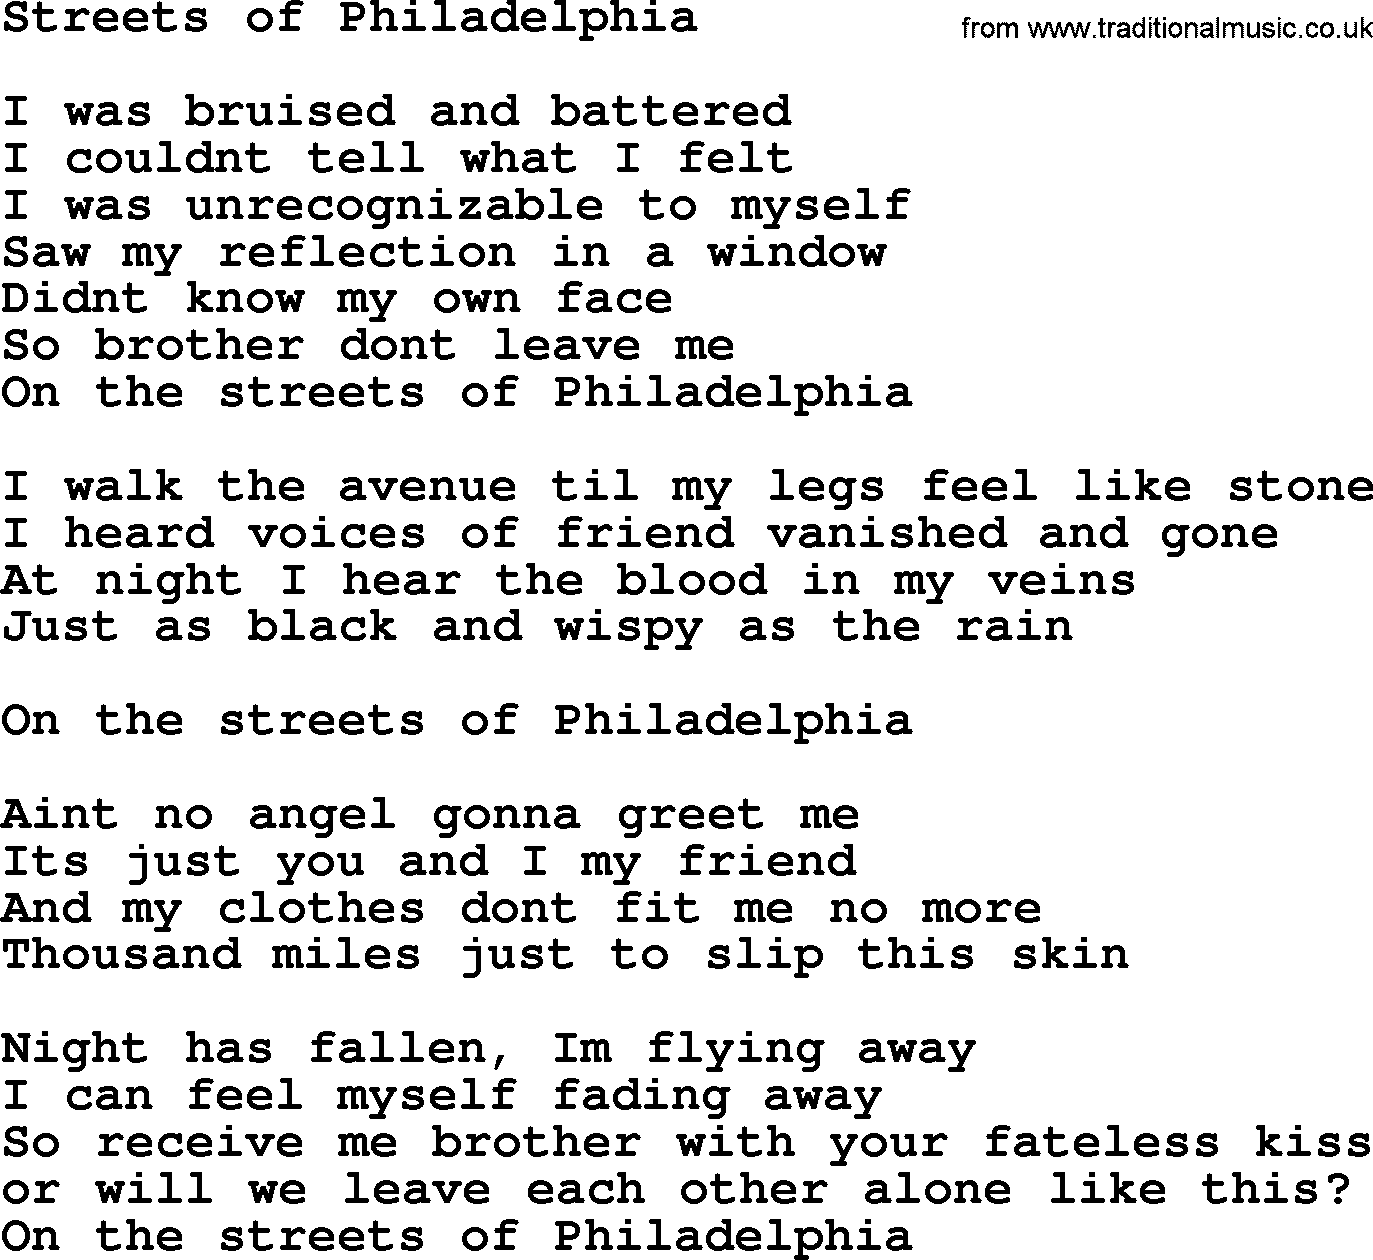 Брюс текст. Bruce Springsteen Streets of Philadelphia текст. Streets текст. Текст песни Streets. Filadelfia песня Street.